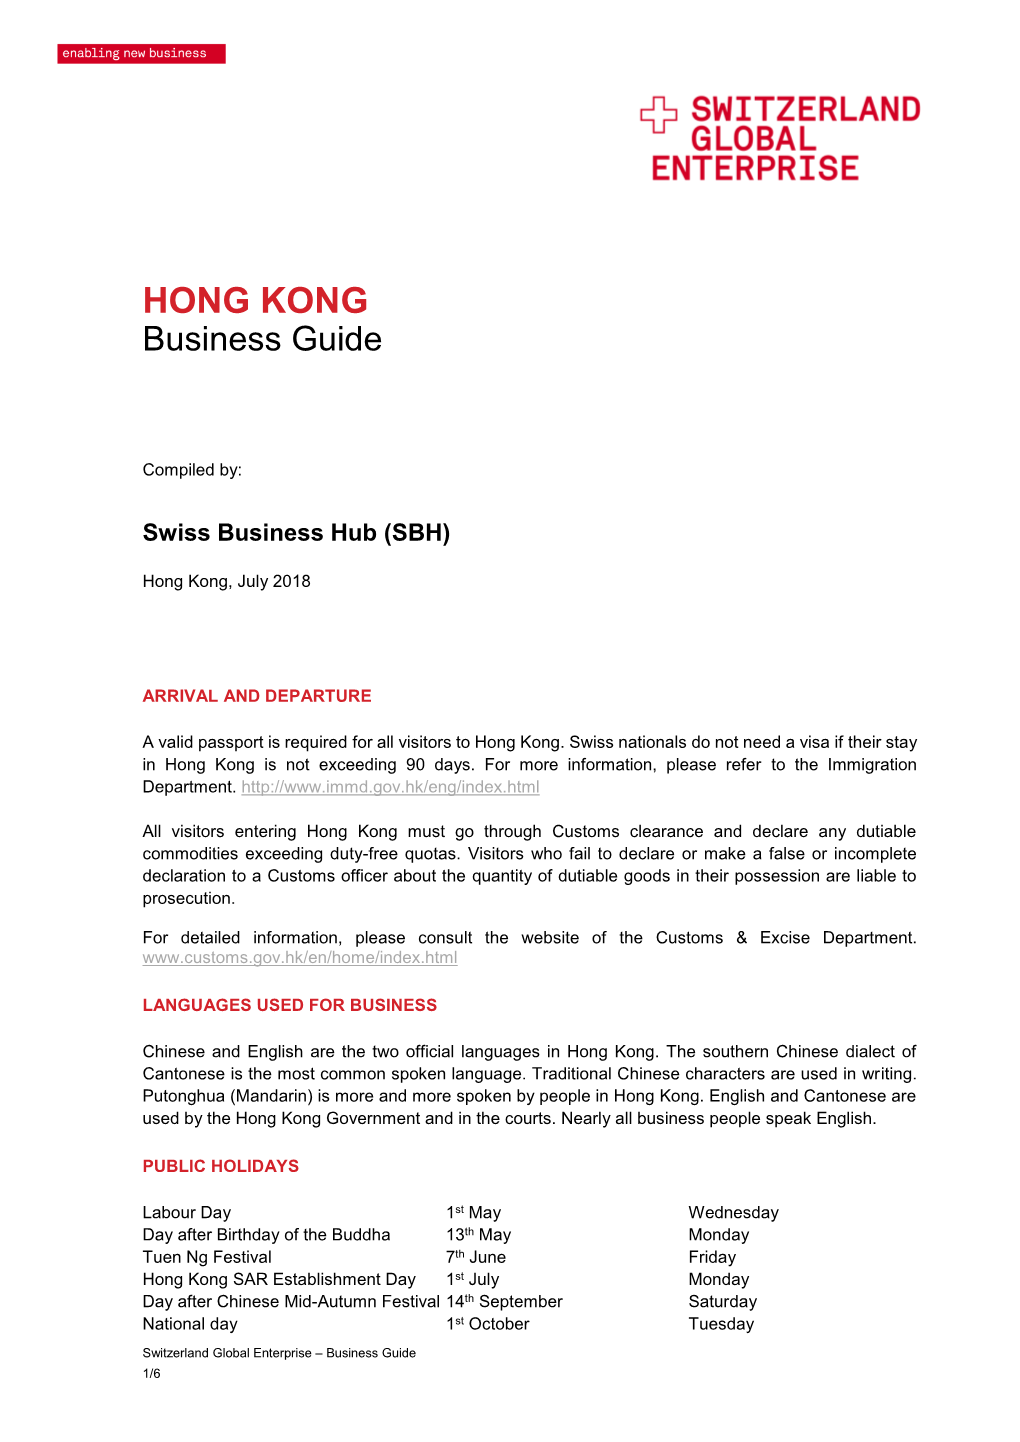 HONG KONG Business Guide